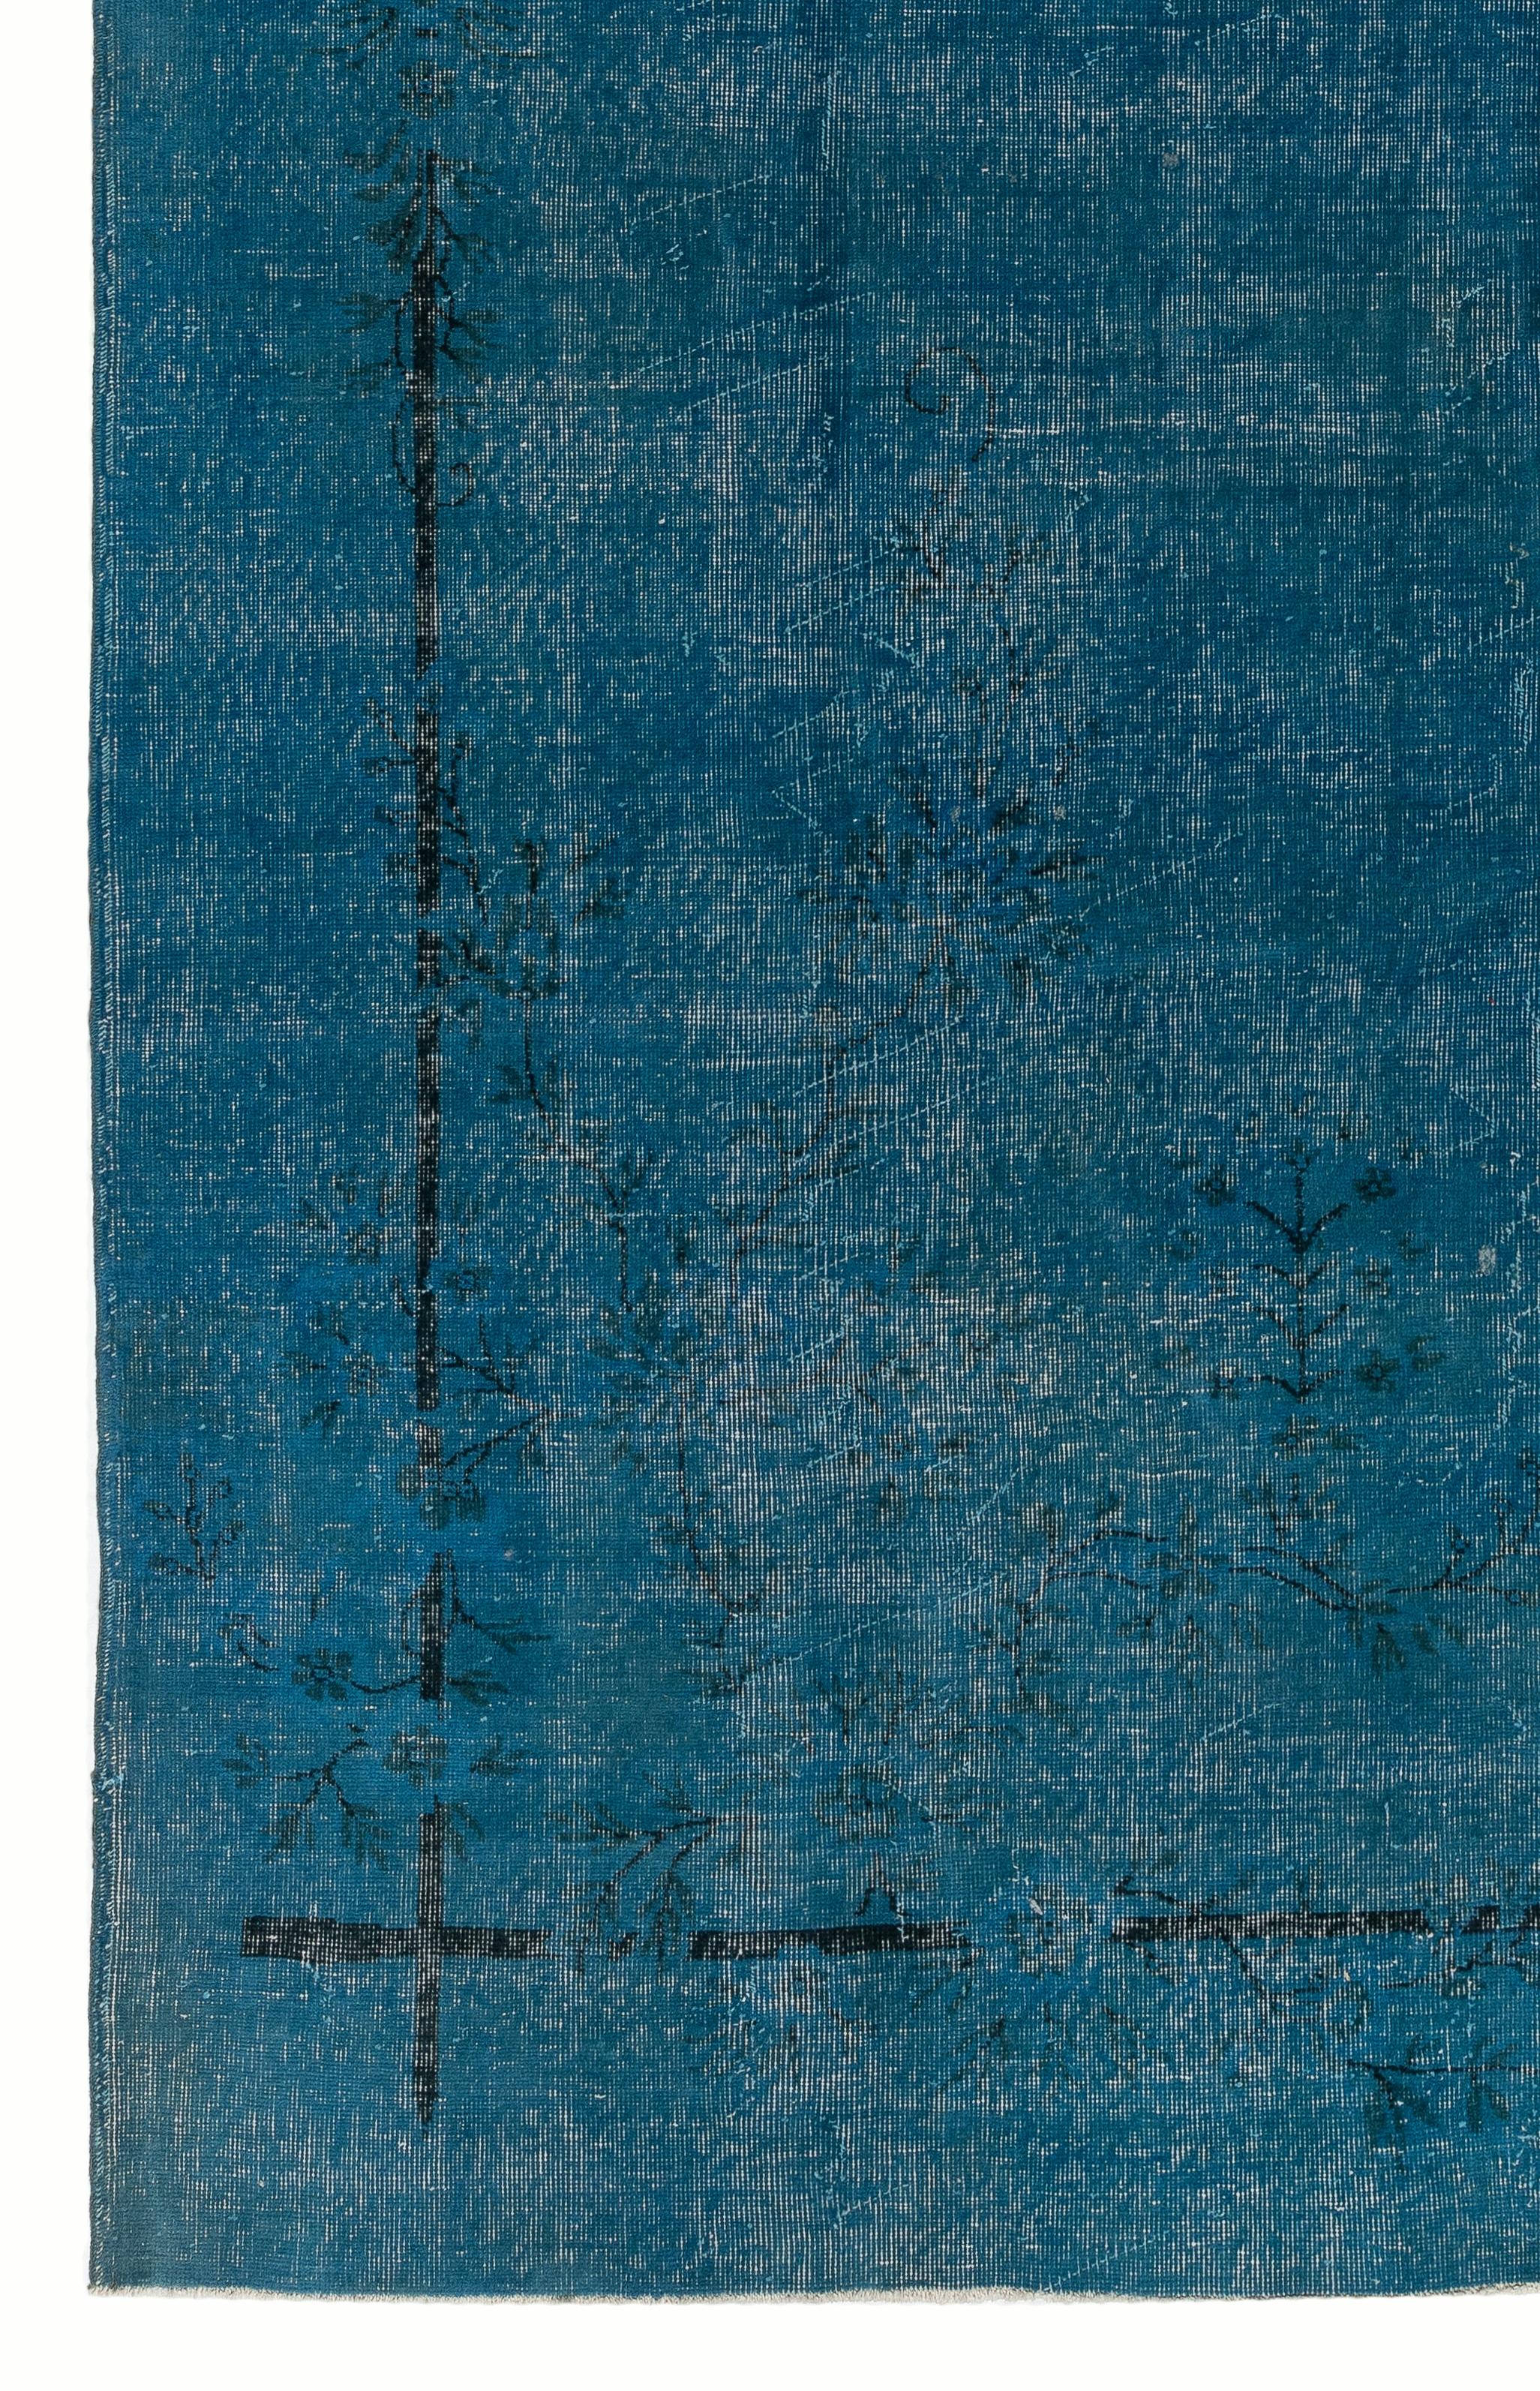 Hand-Woven 8x11.7 Ft Vintage Handmade Art Deco Rug in Blue, Modern Home Decor Carpet For Sale